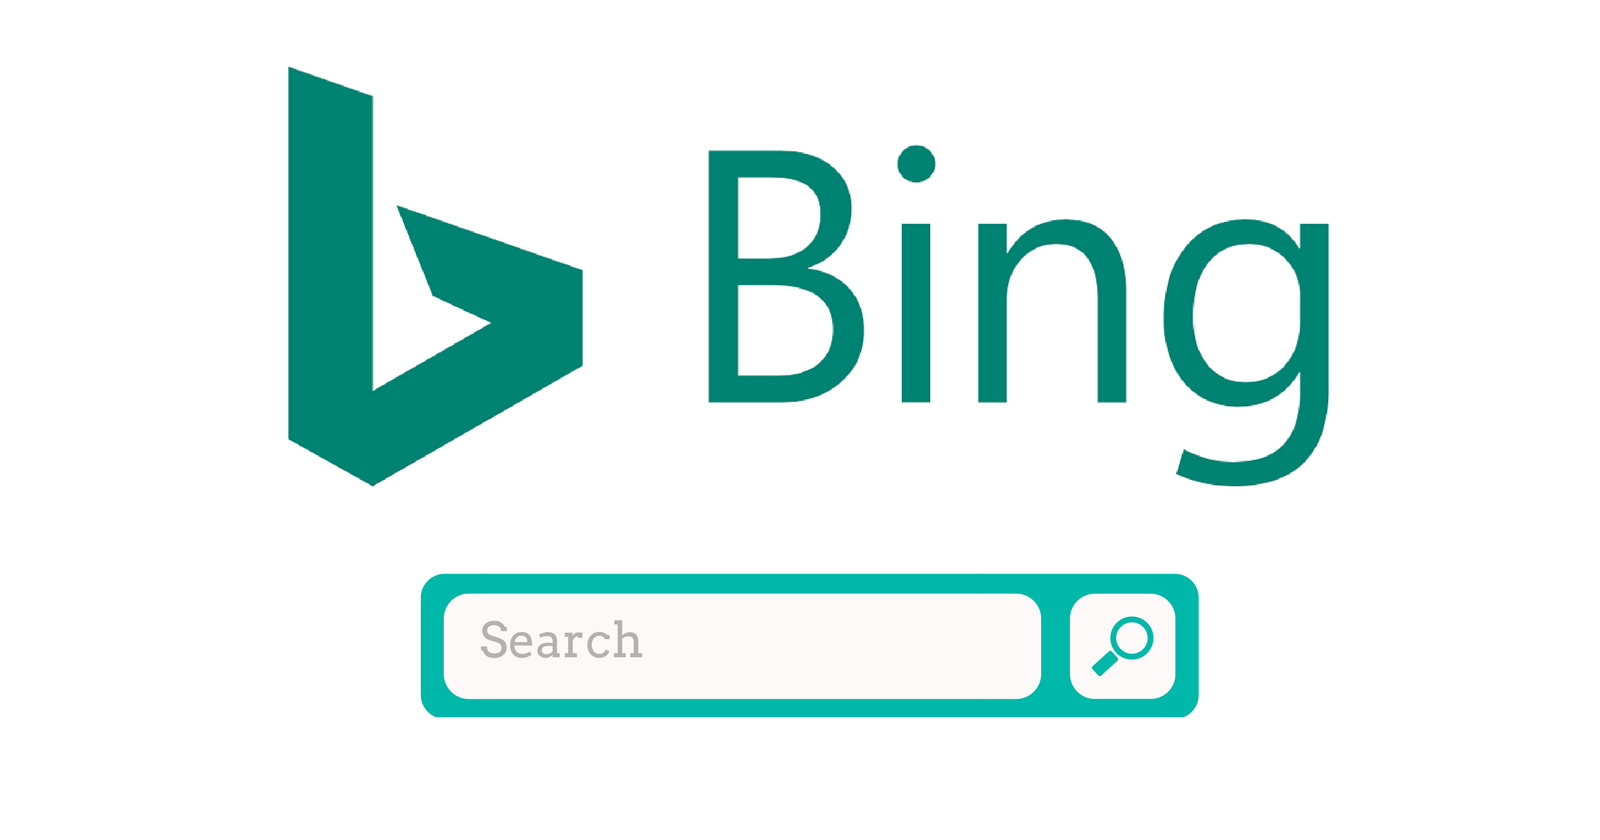 bing search engine